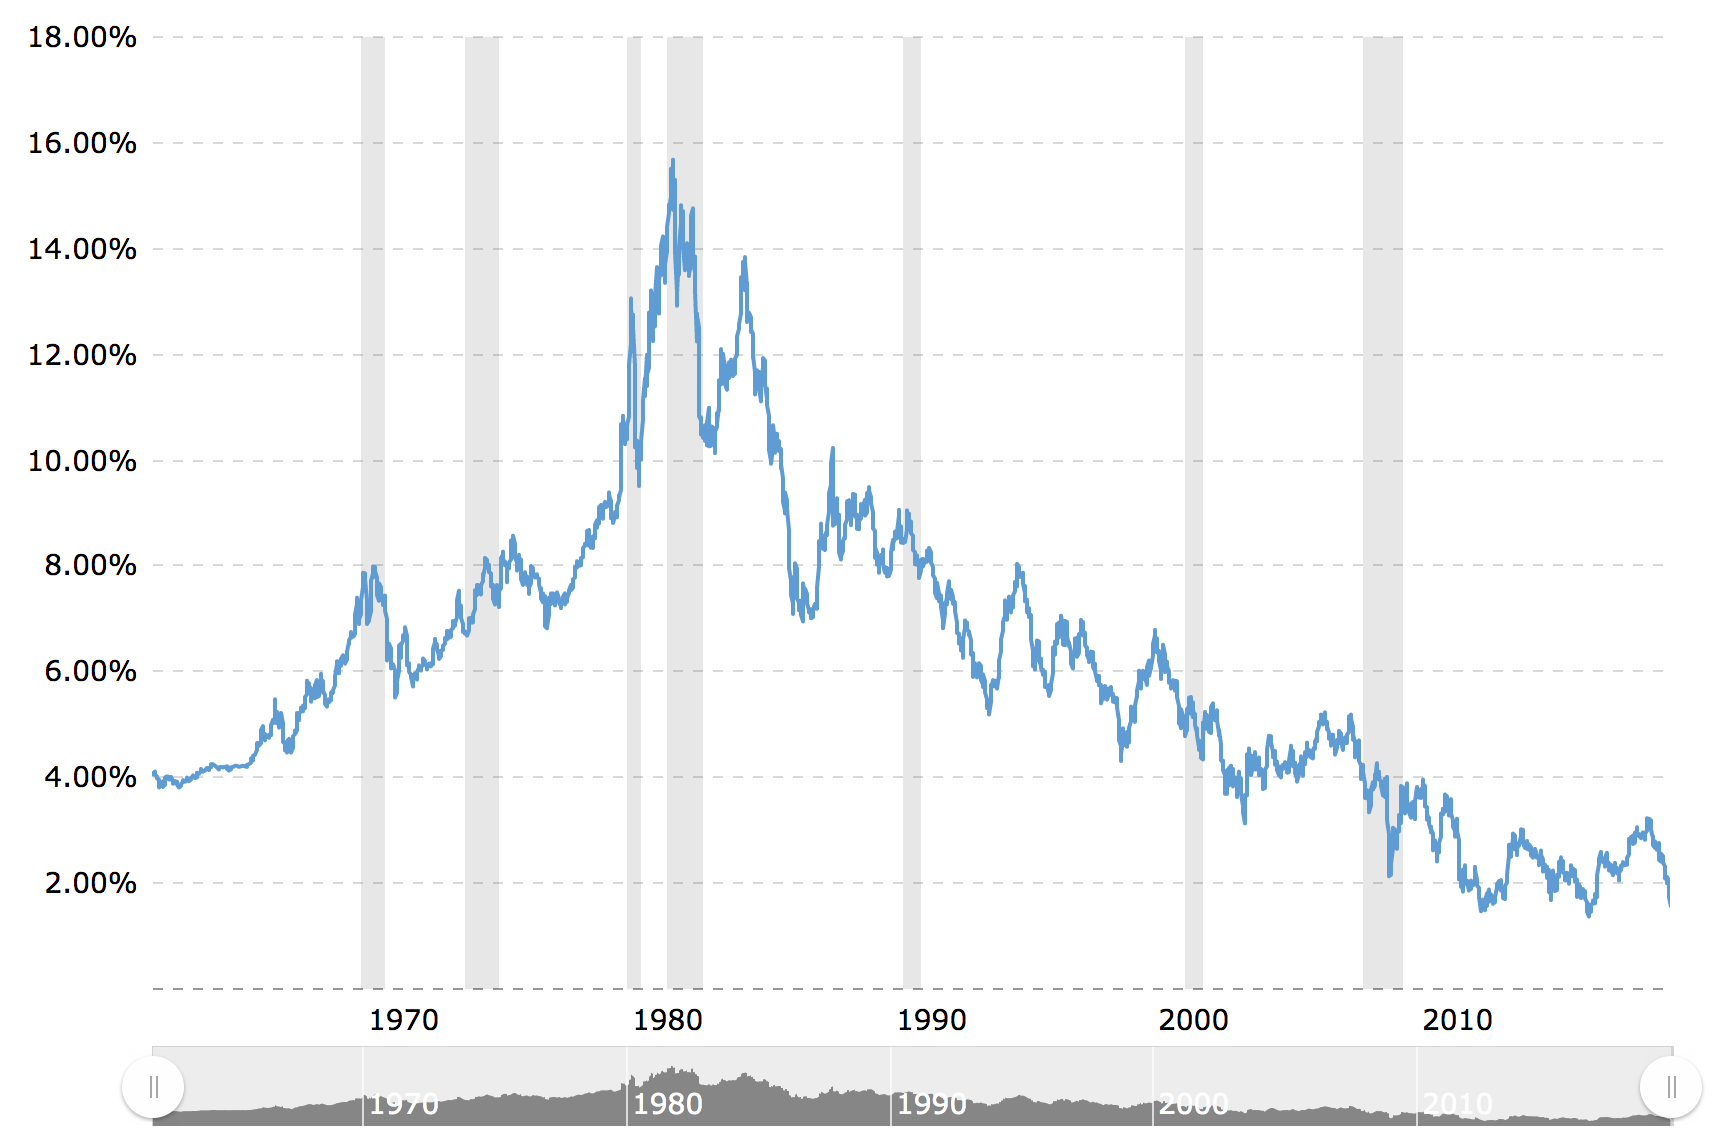 Us Treasury Yield Chart